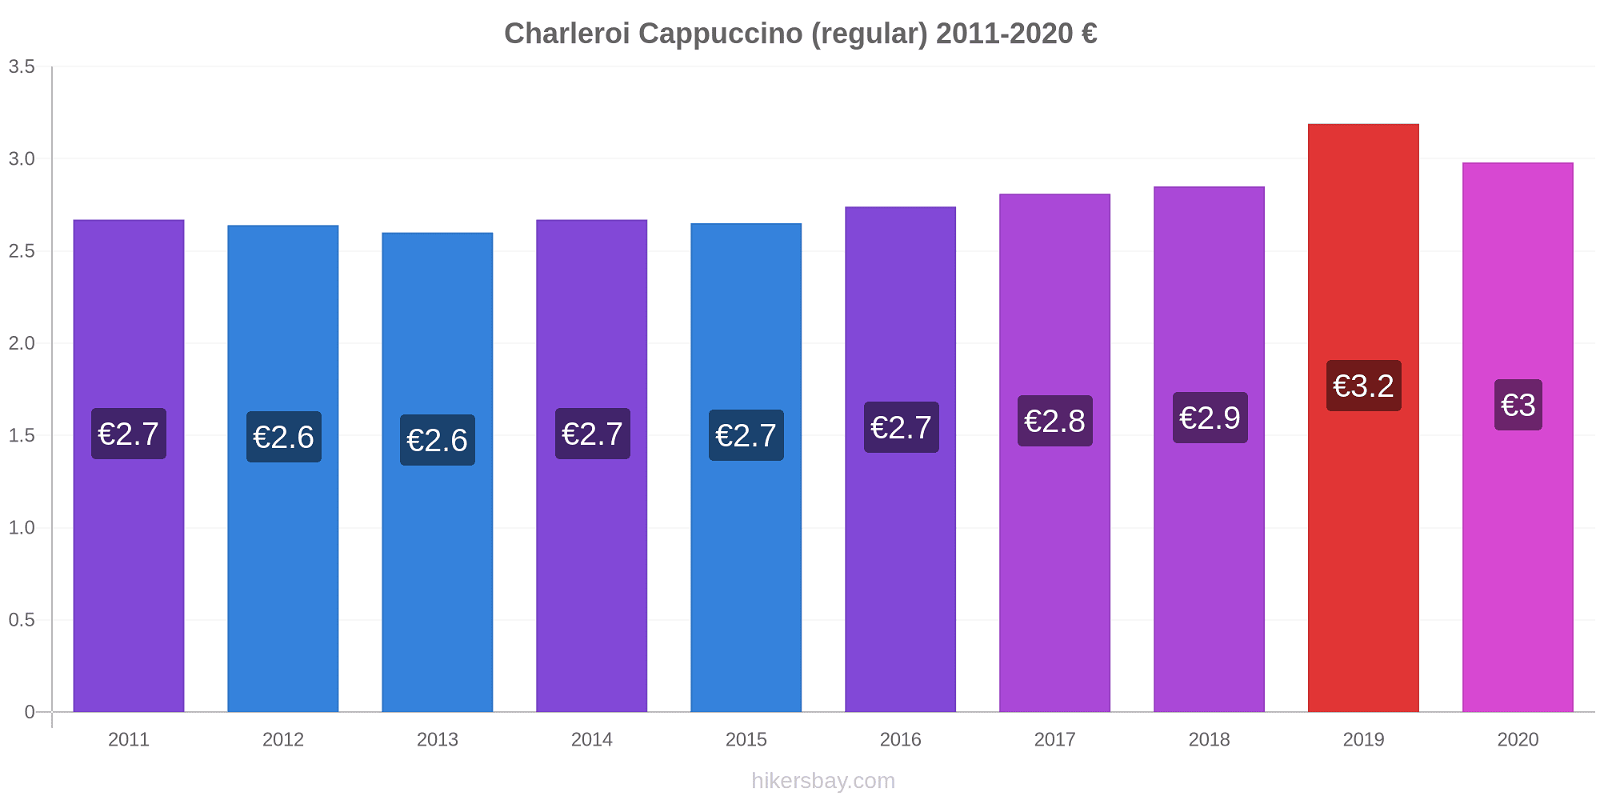 Charleroi price changes Cappuccino (regular) hikersbay.com